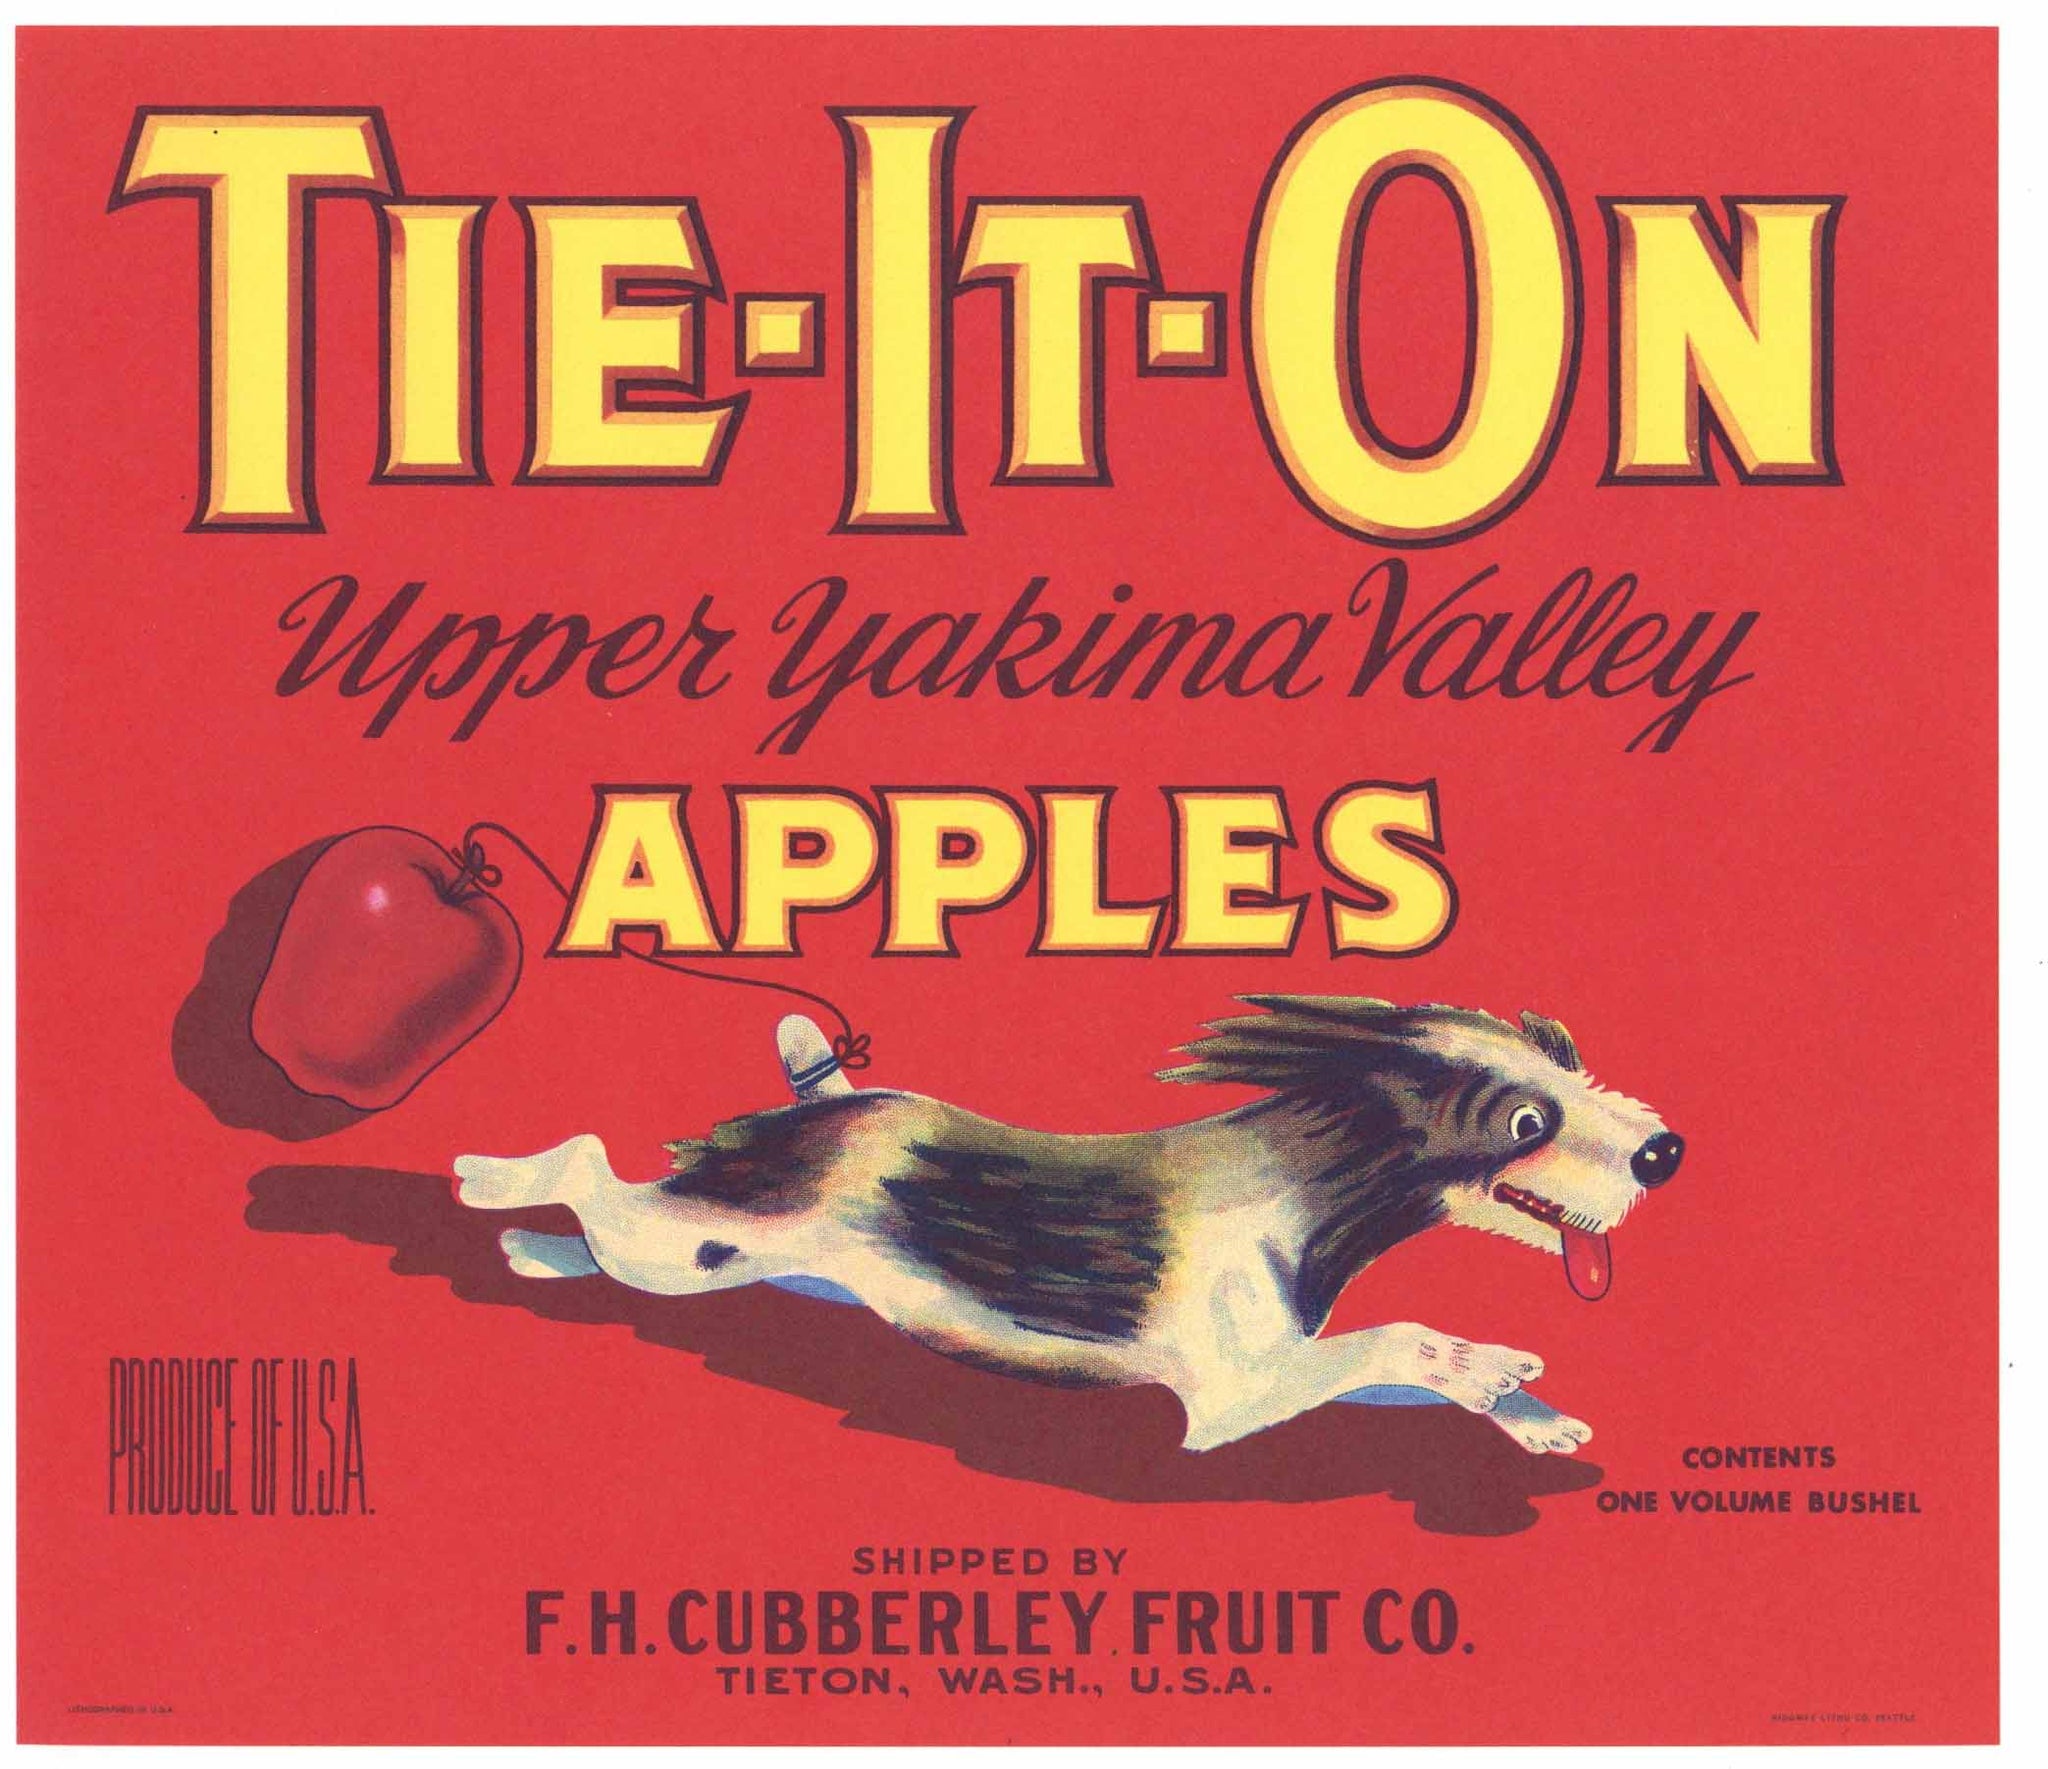 Tie-It-On Brand Vintage Tieton, Washington Apple Crate Label, red